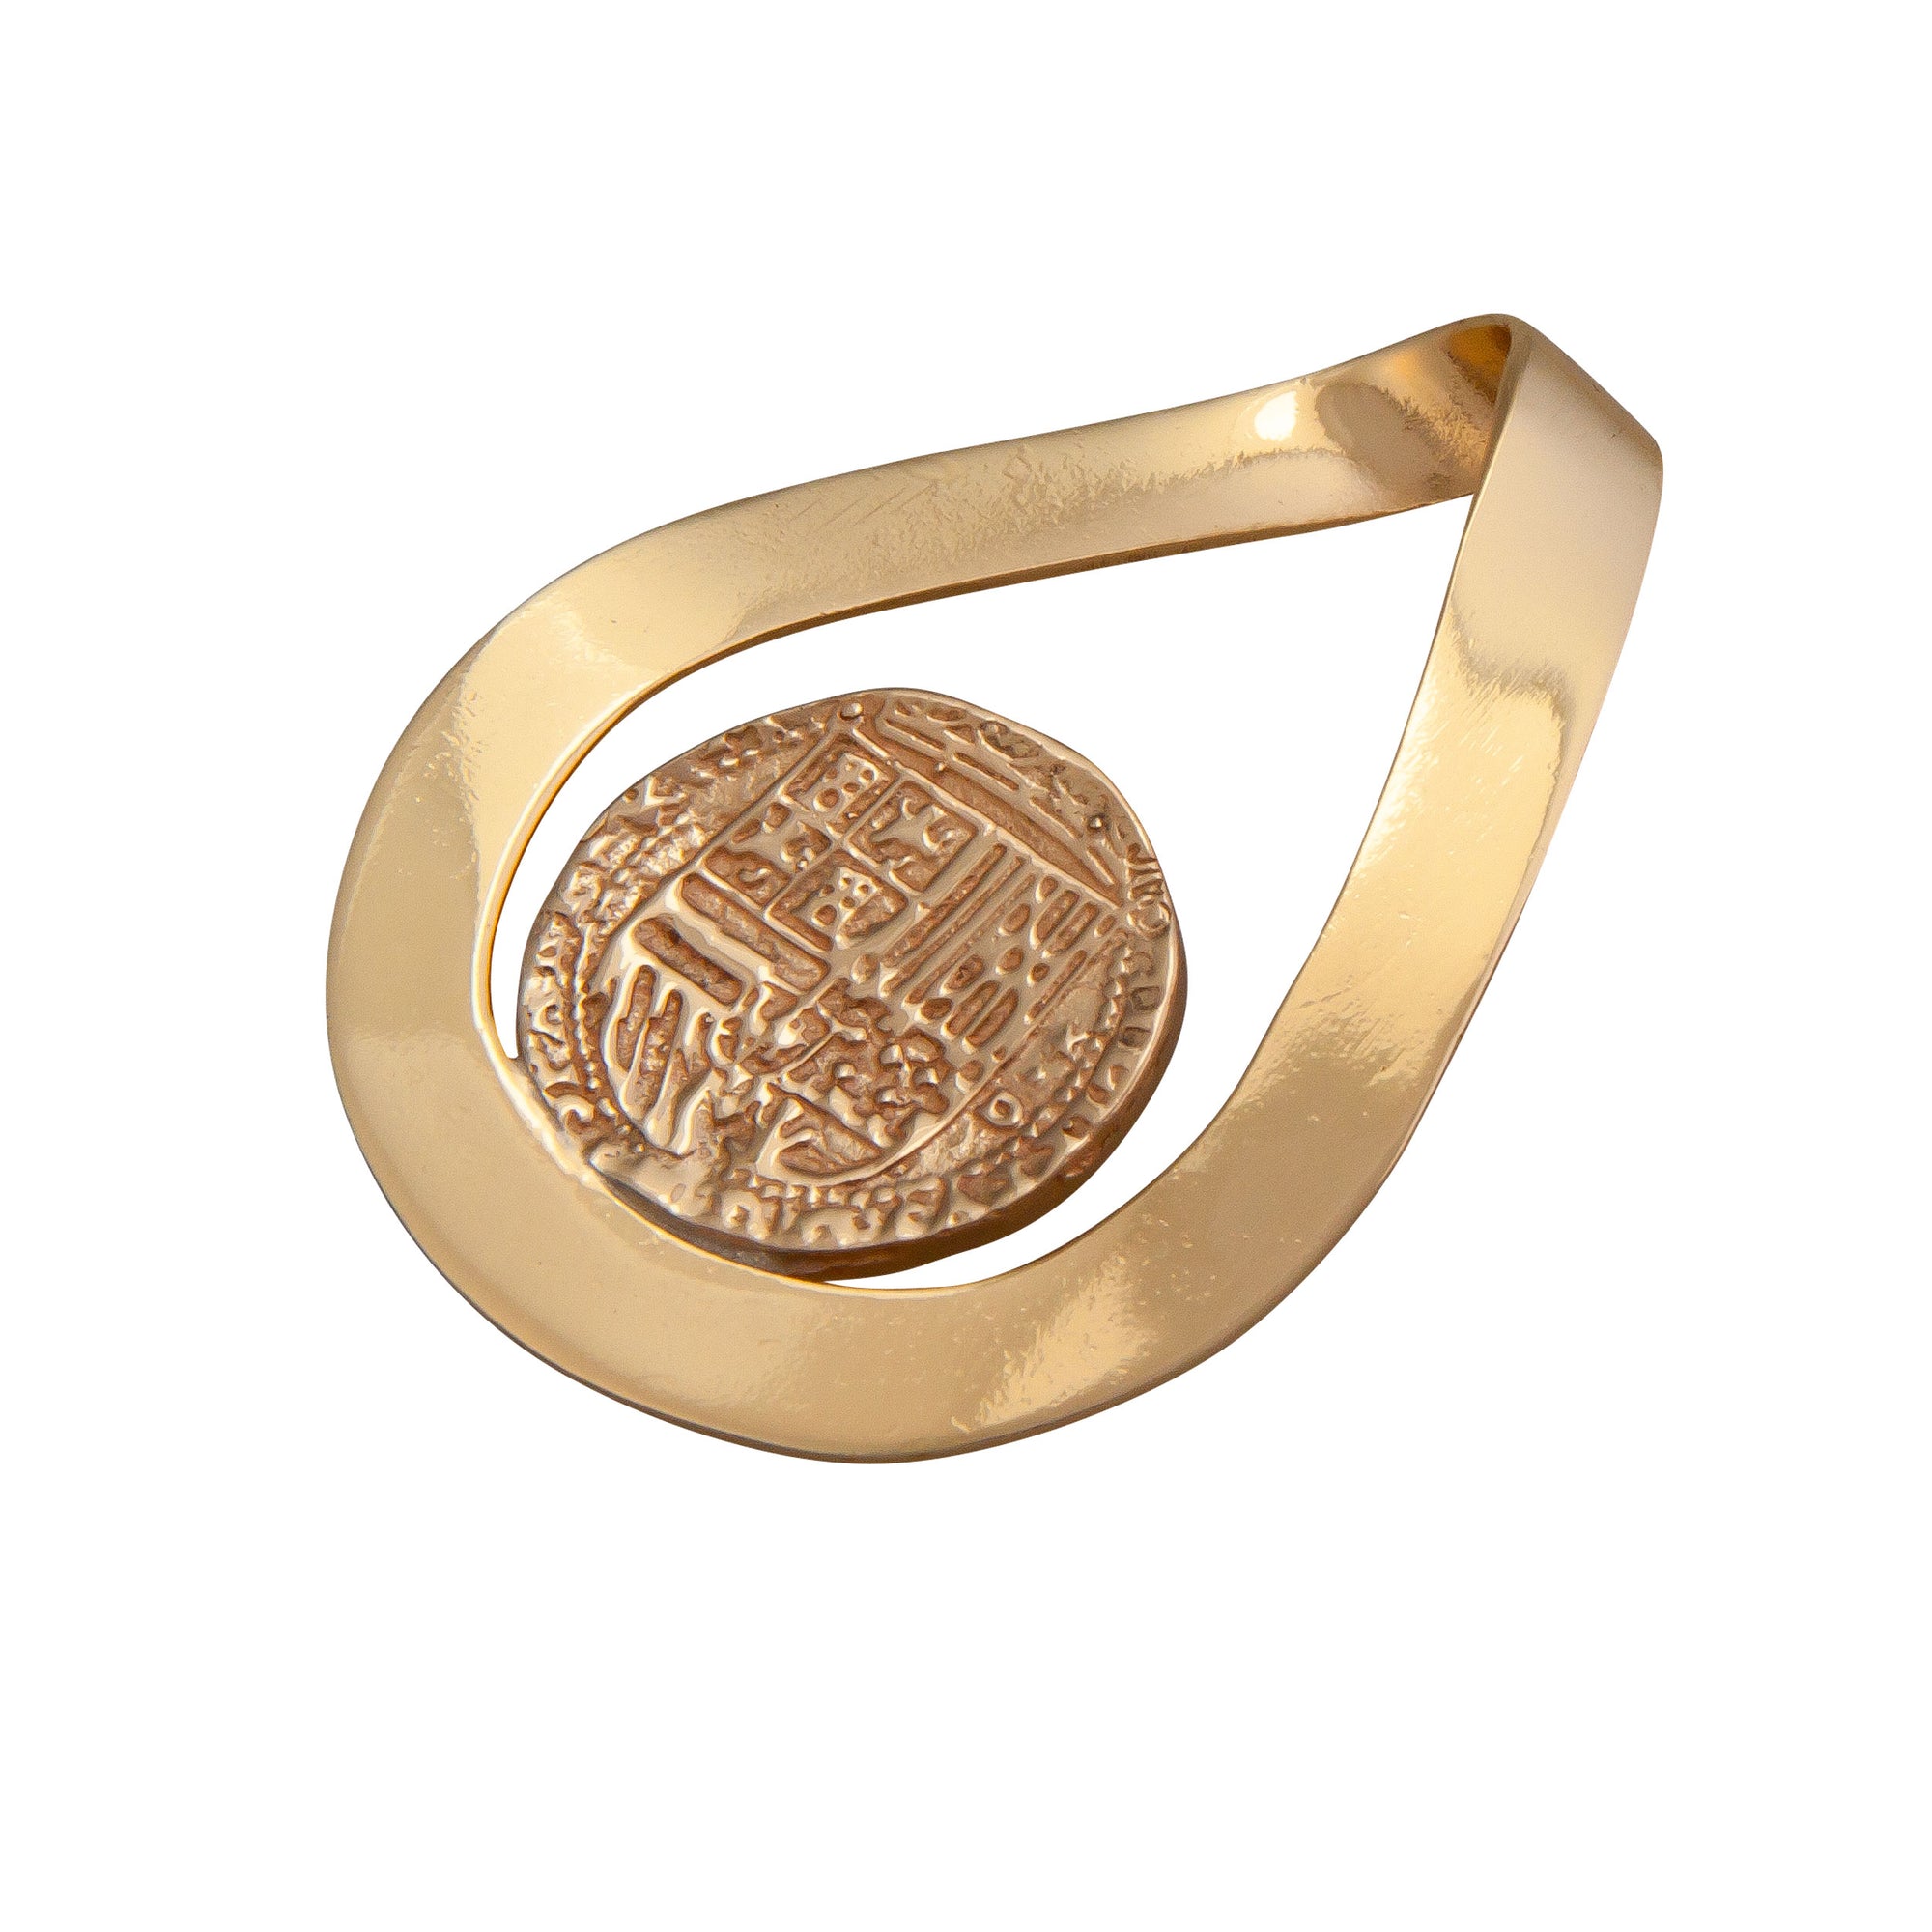 Alchemia Replica Spanish Coin Pendant with Twist Bale | Charles Albert Jewelry